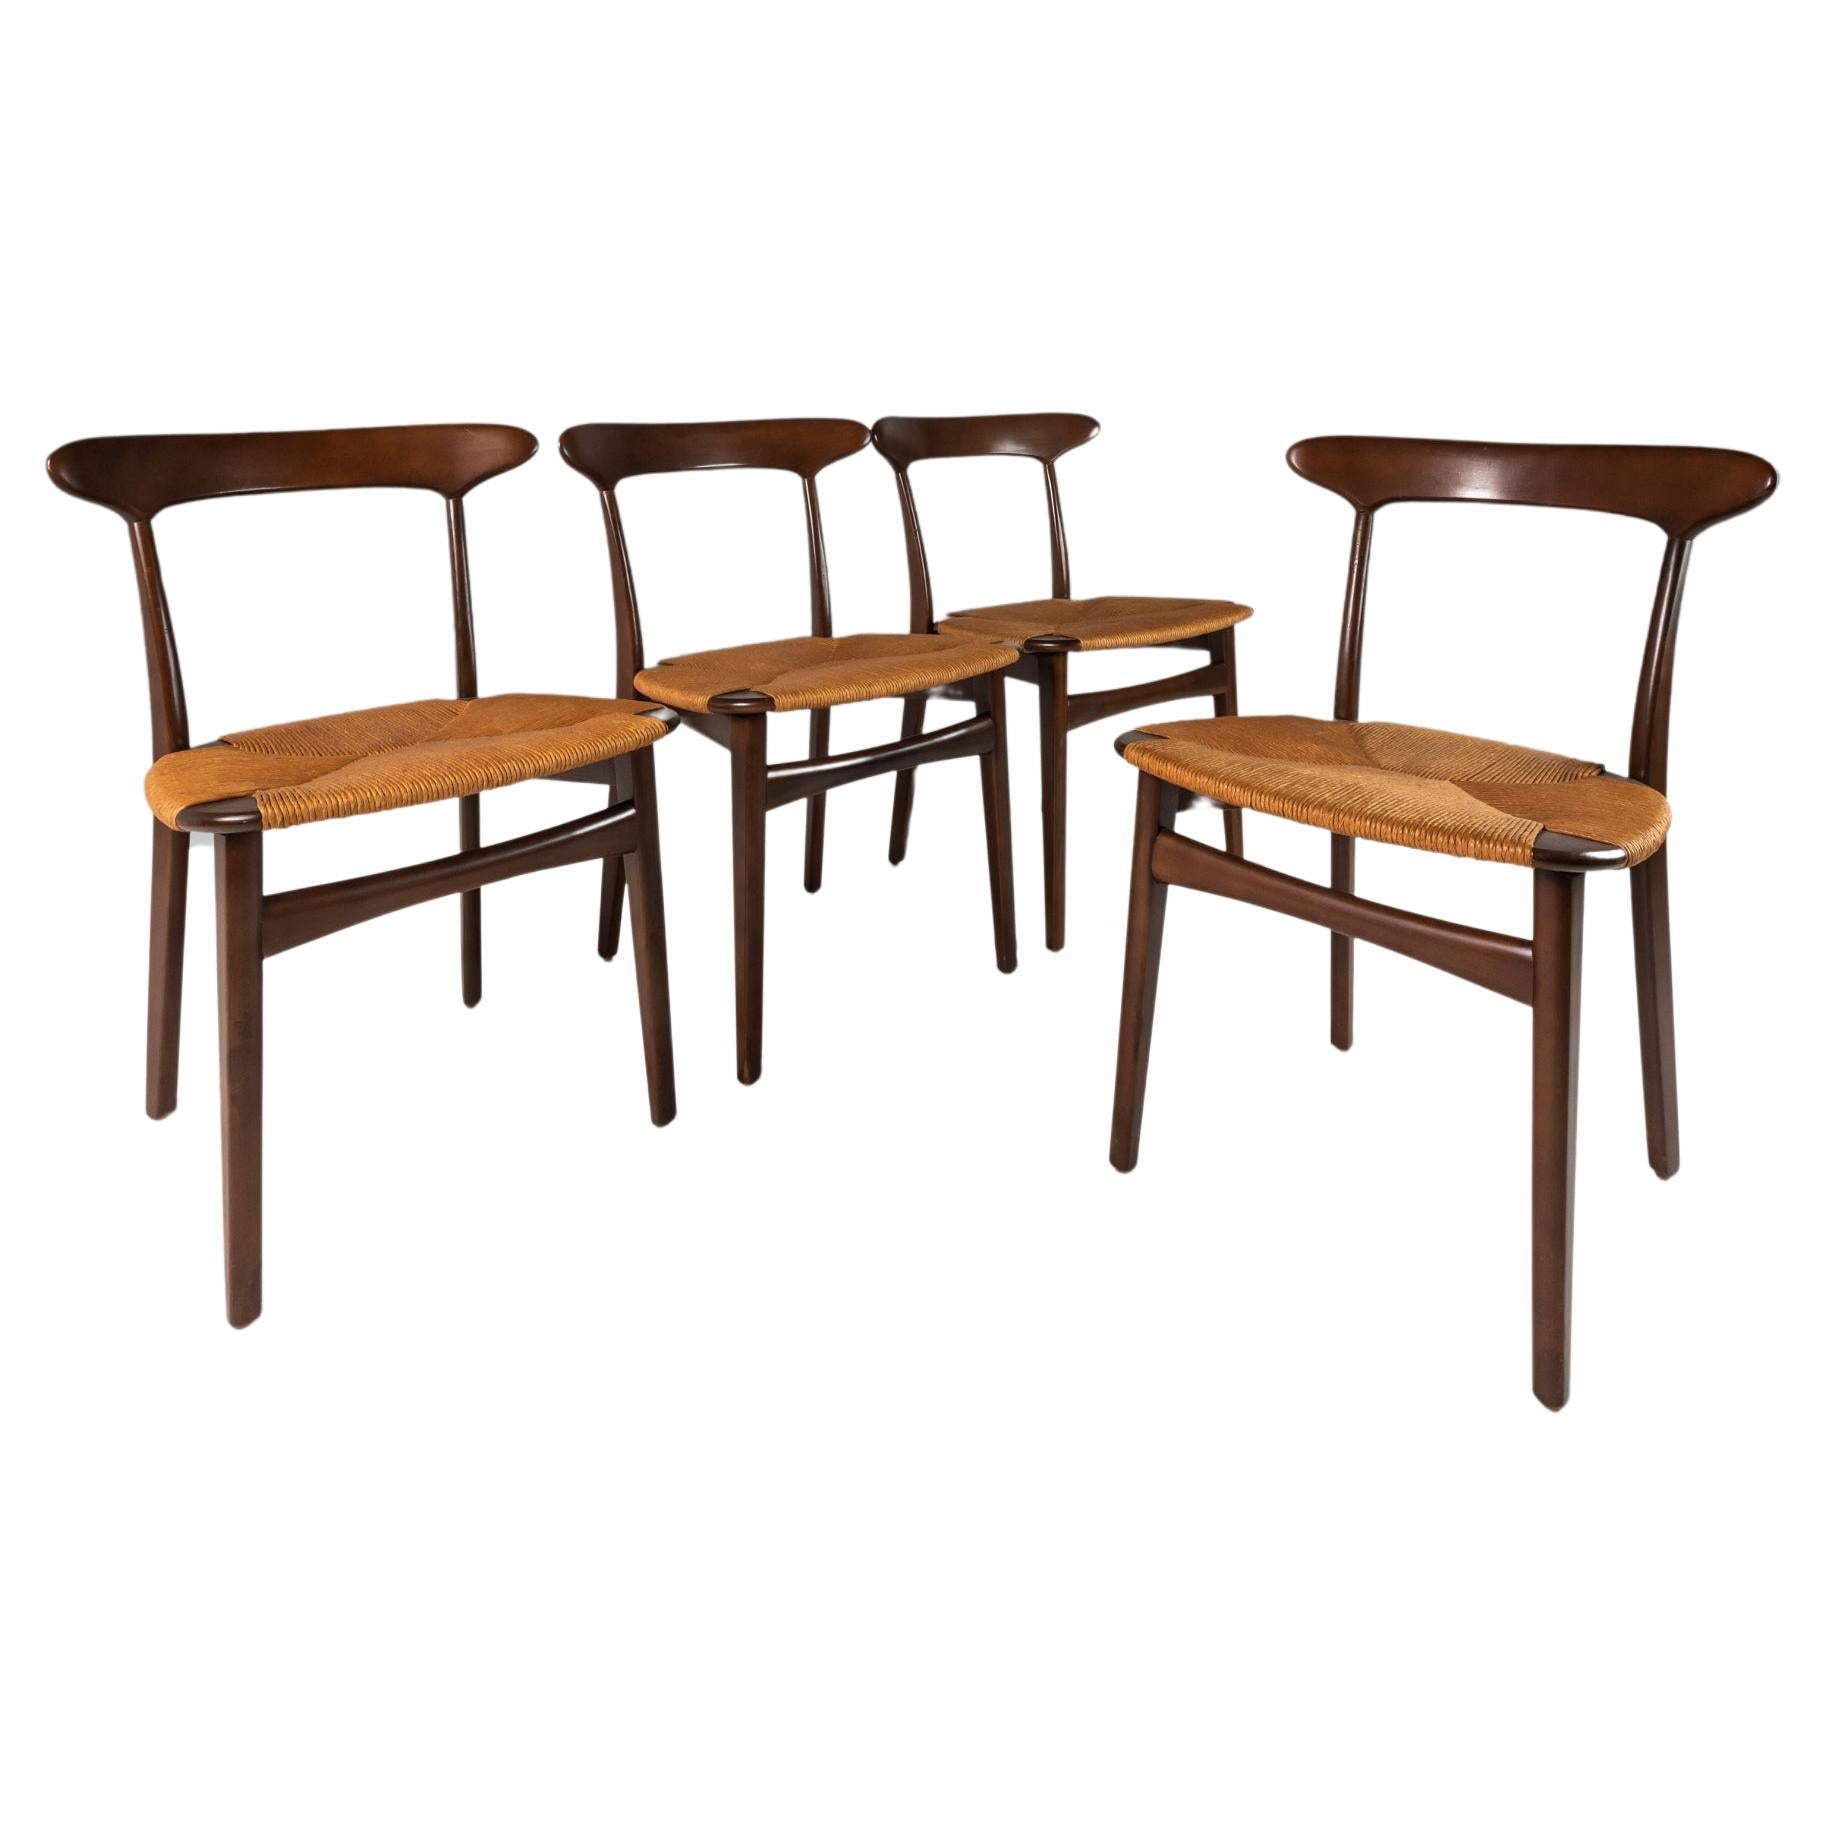 Set of Four (4) Danish Modern Thrush Dining Chairs After Hans J. Wegner, c. 1960 For Sale